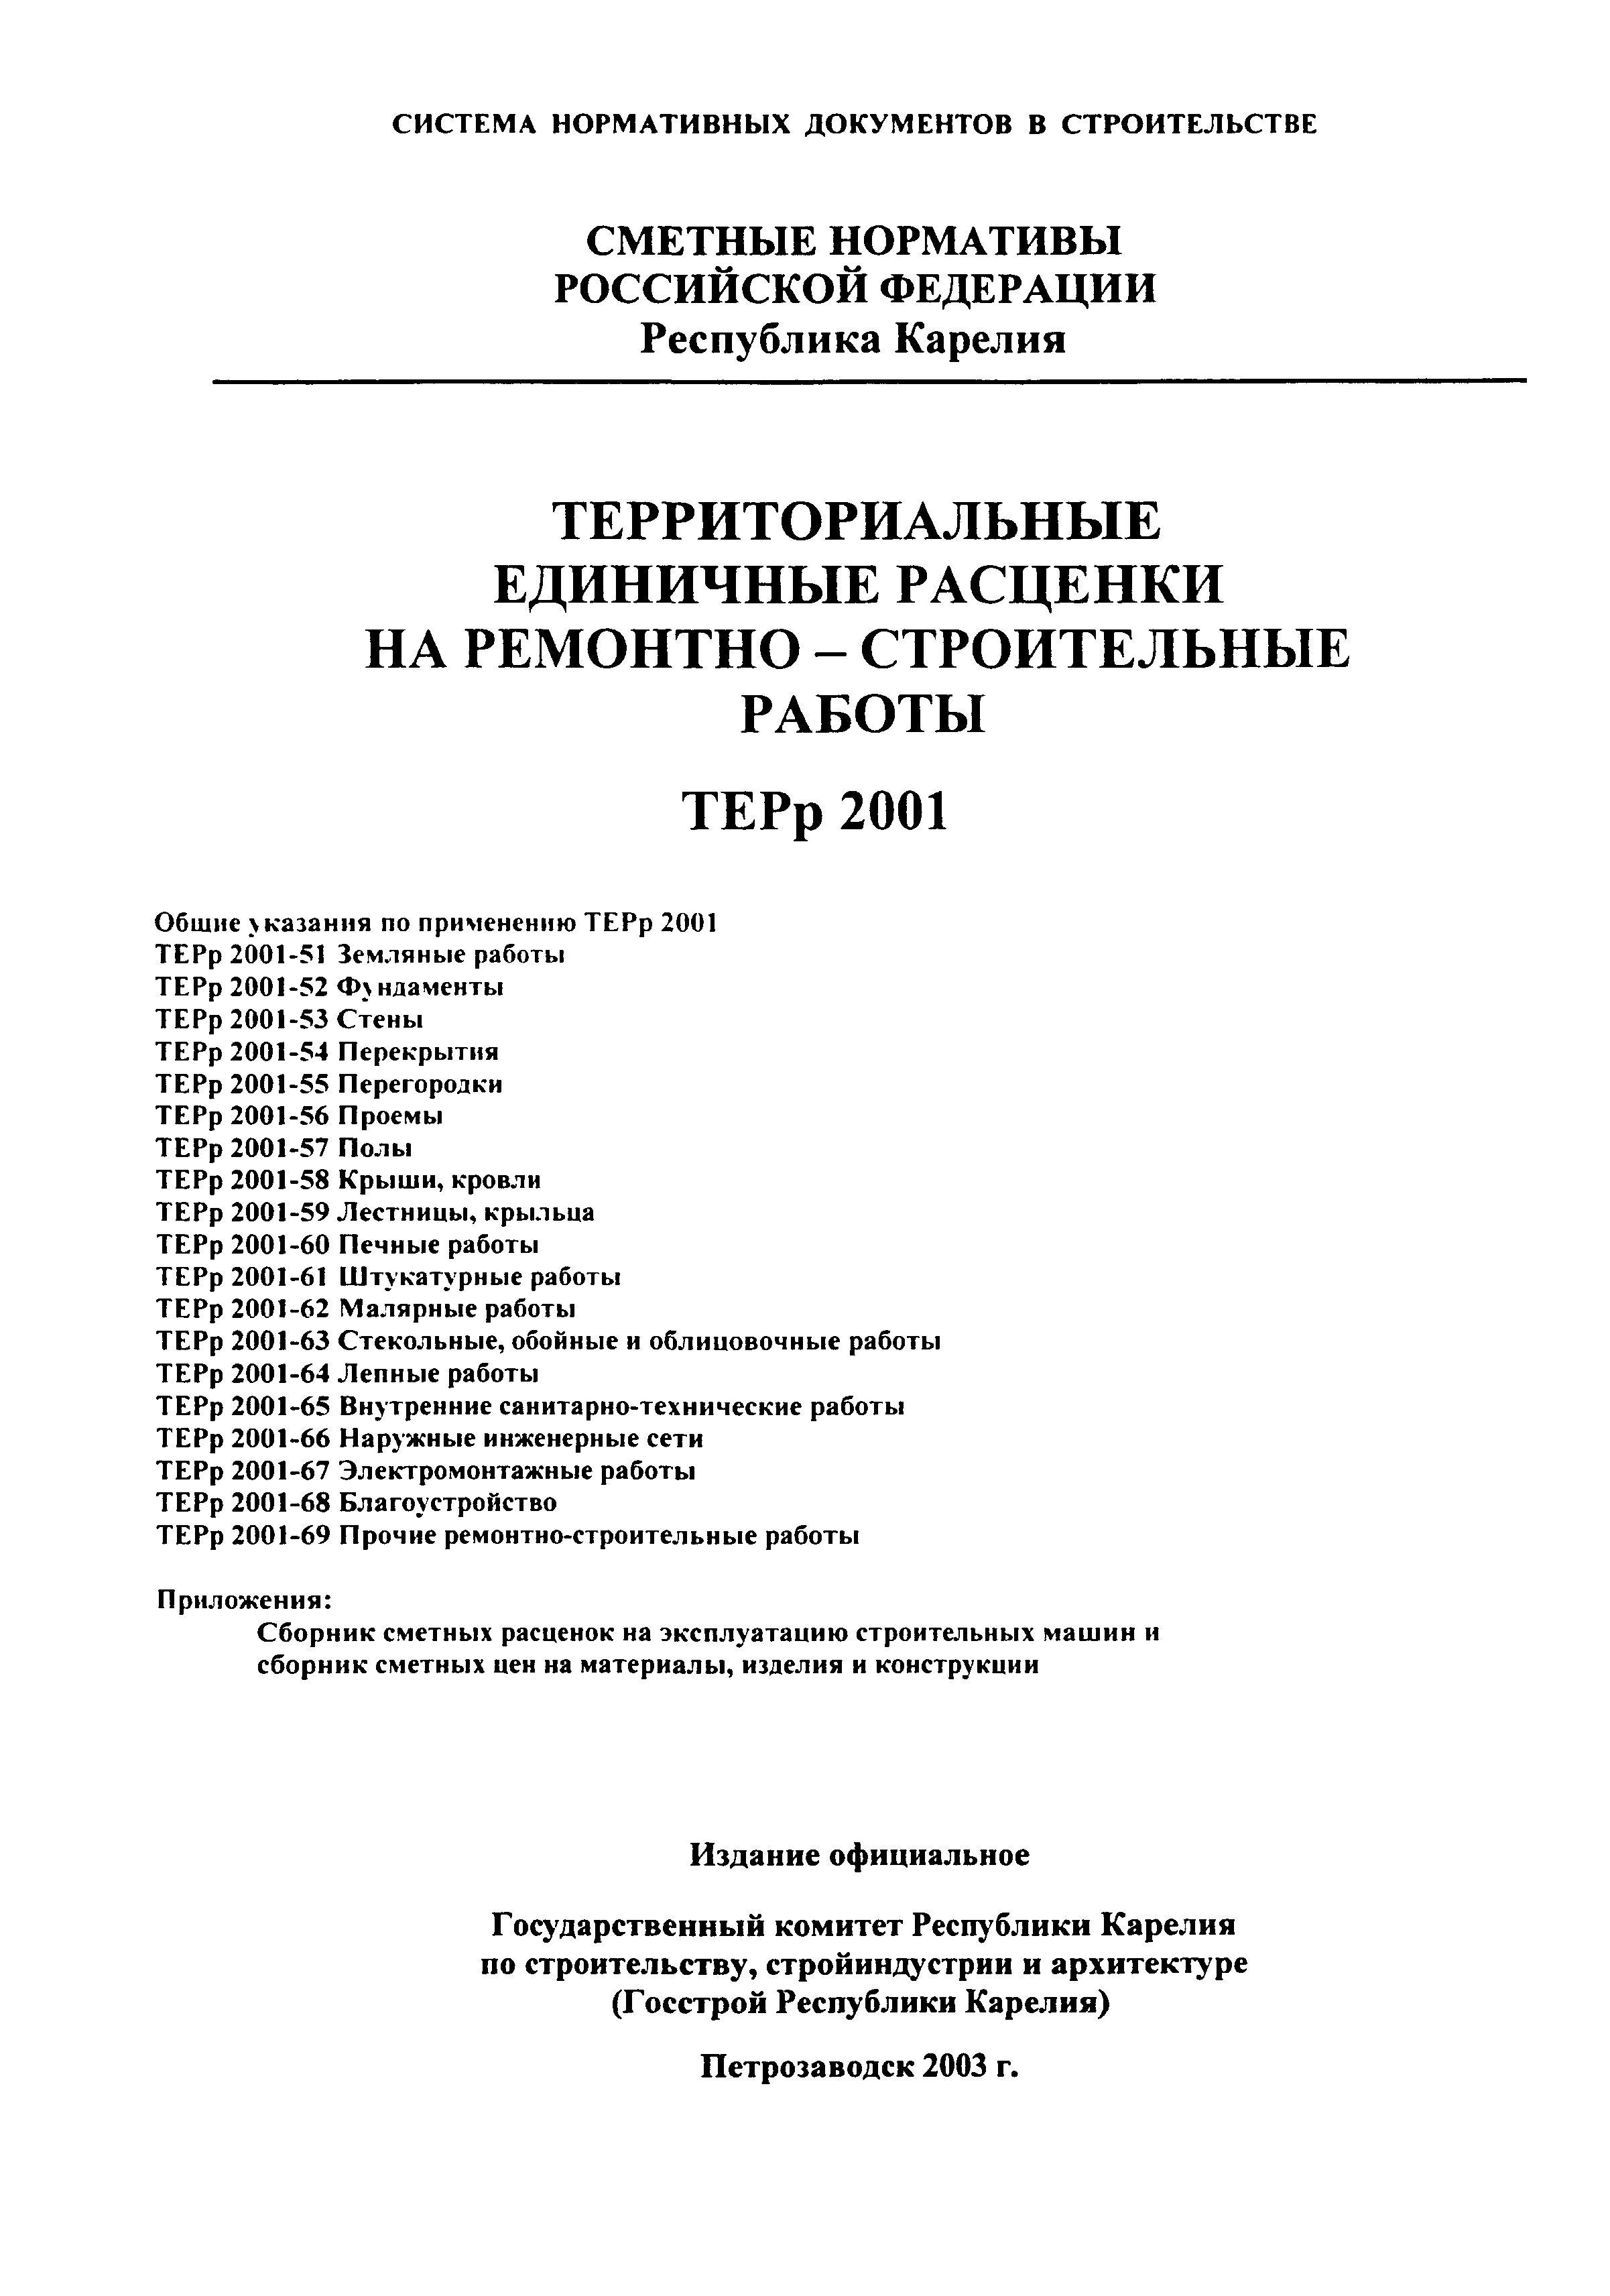 ТЕРр Республика Карелия 2001-53